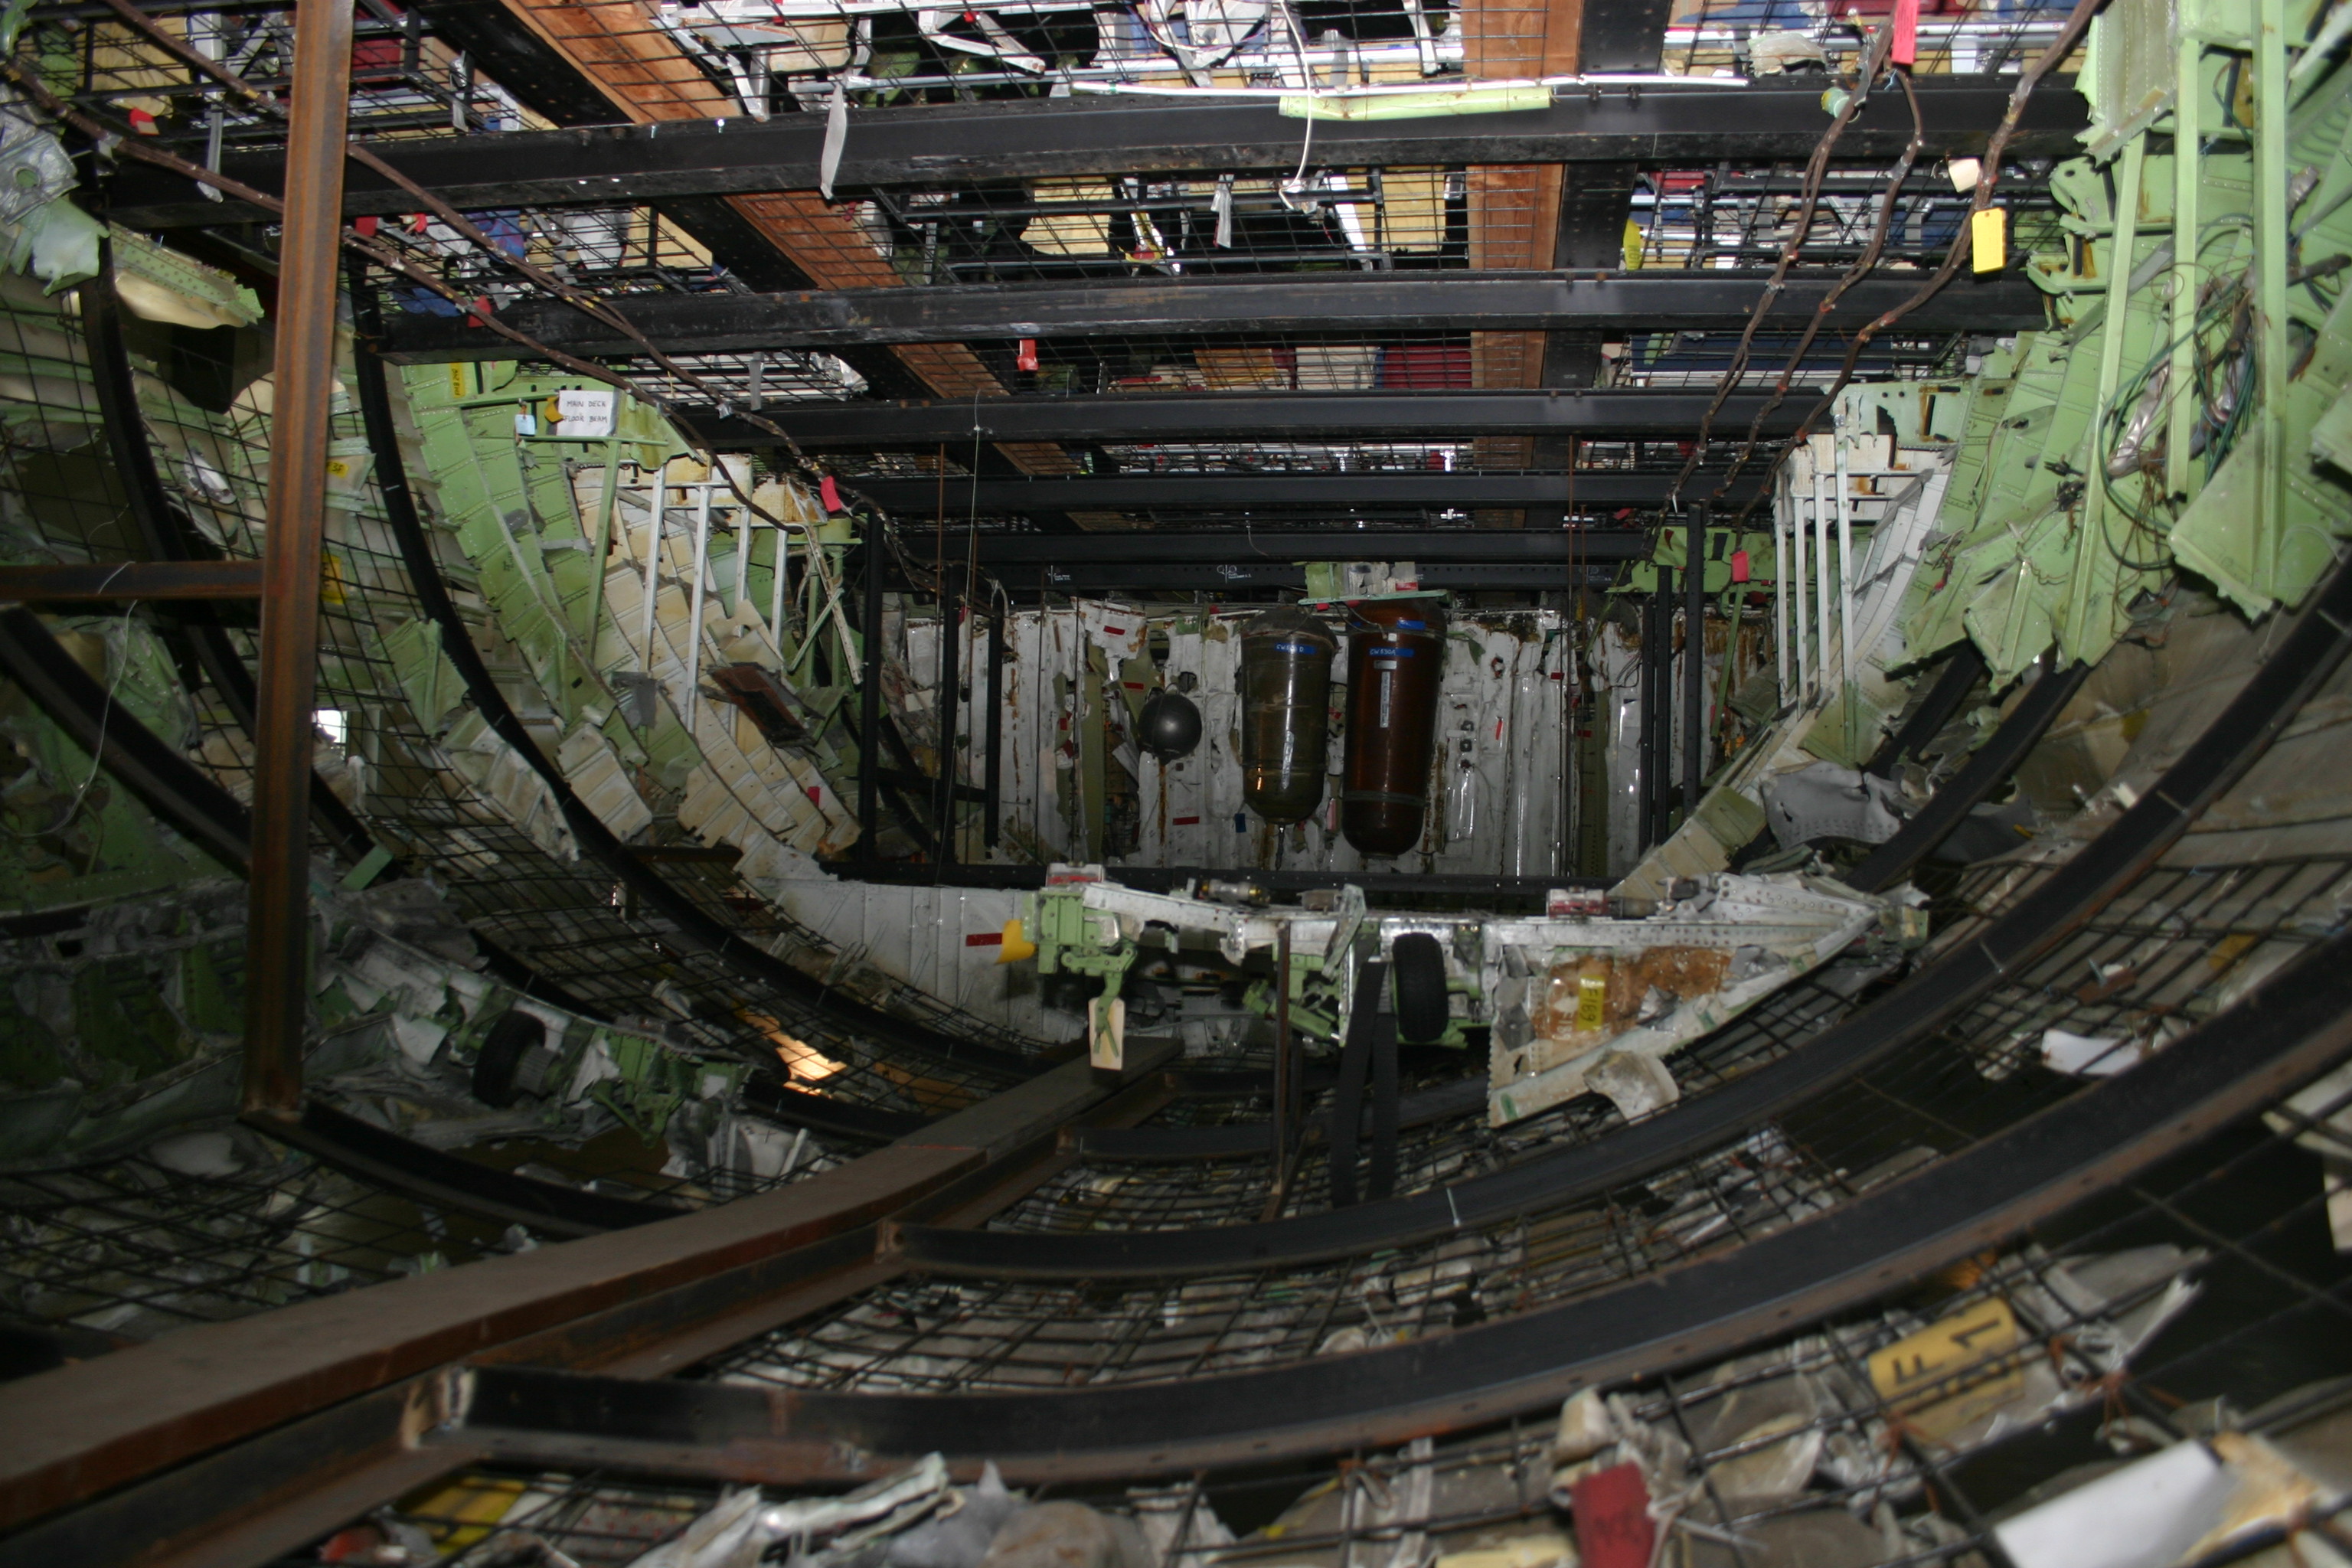 TWA Flight 800 crash: A look at the plane's wreckage